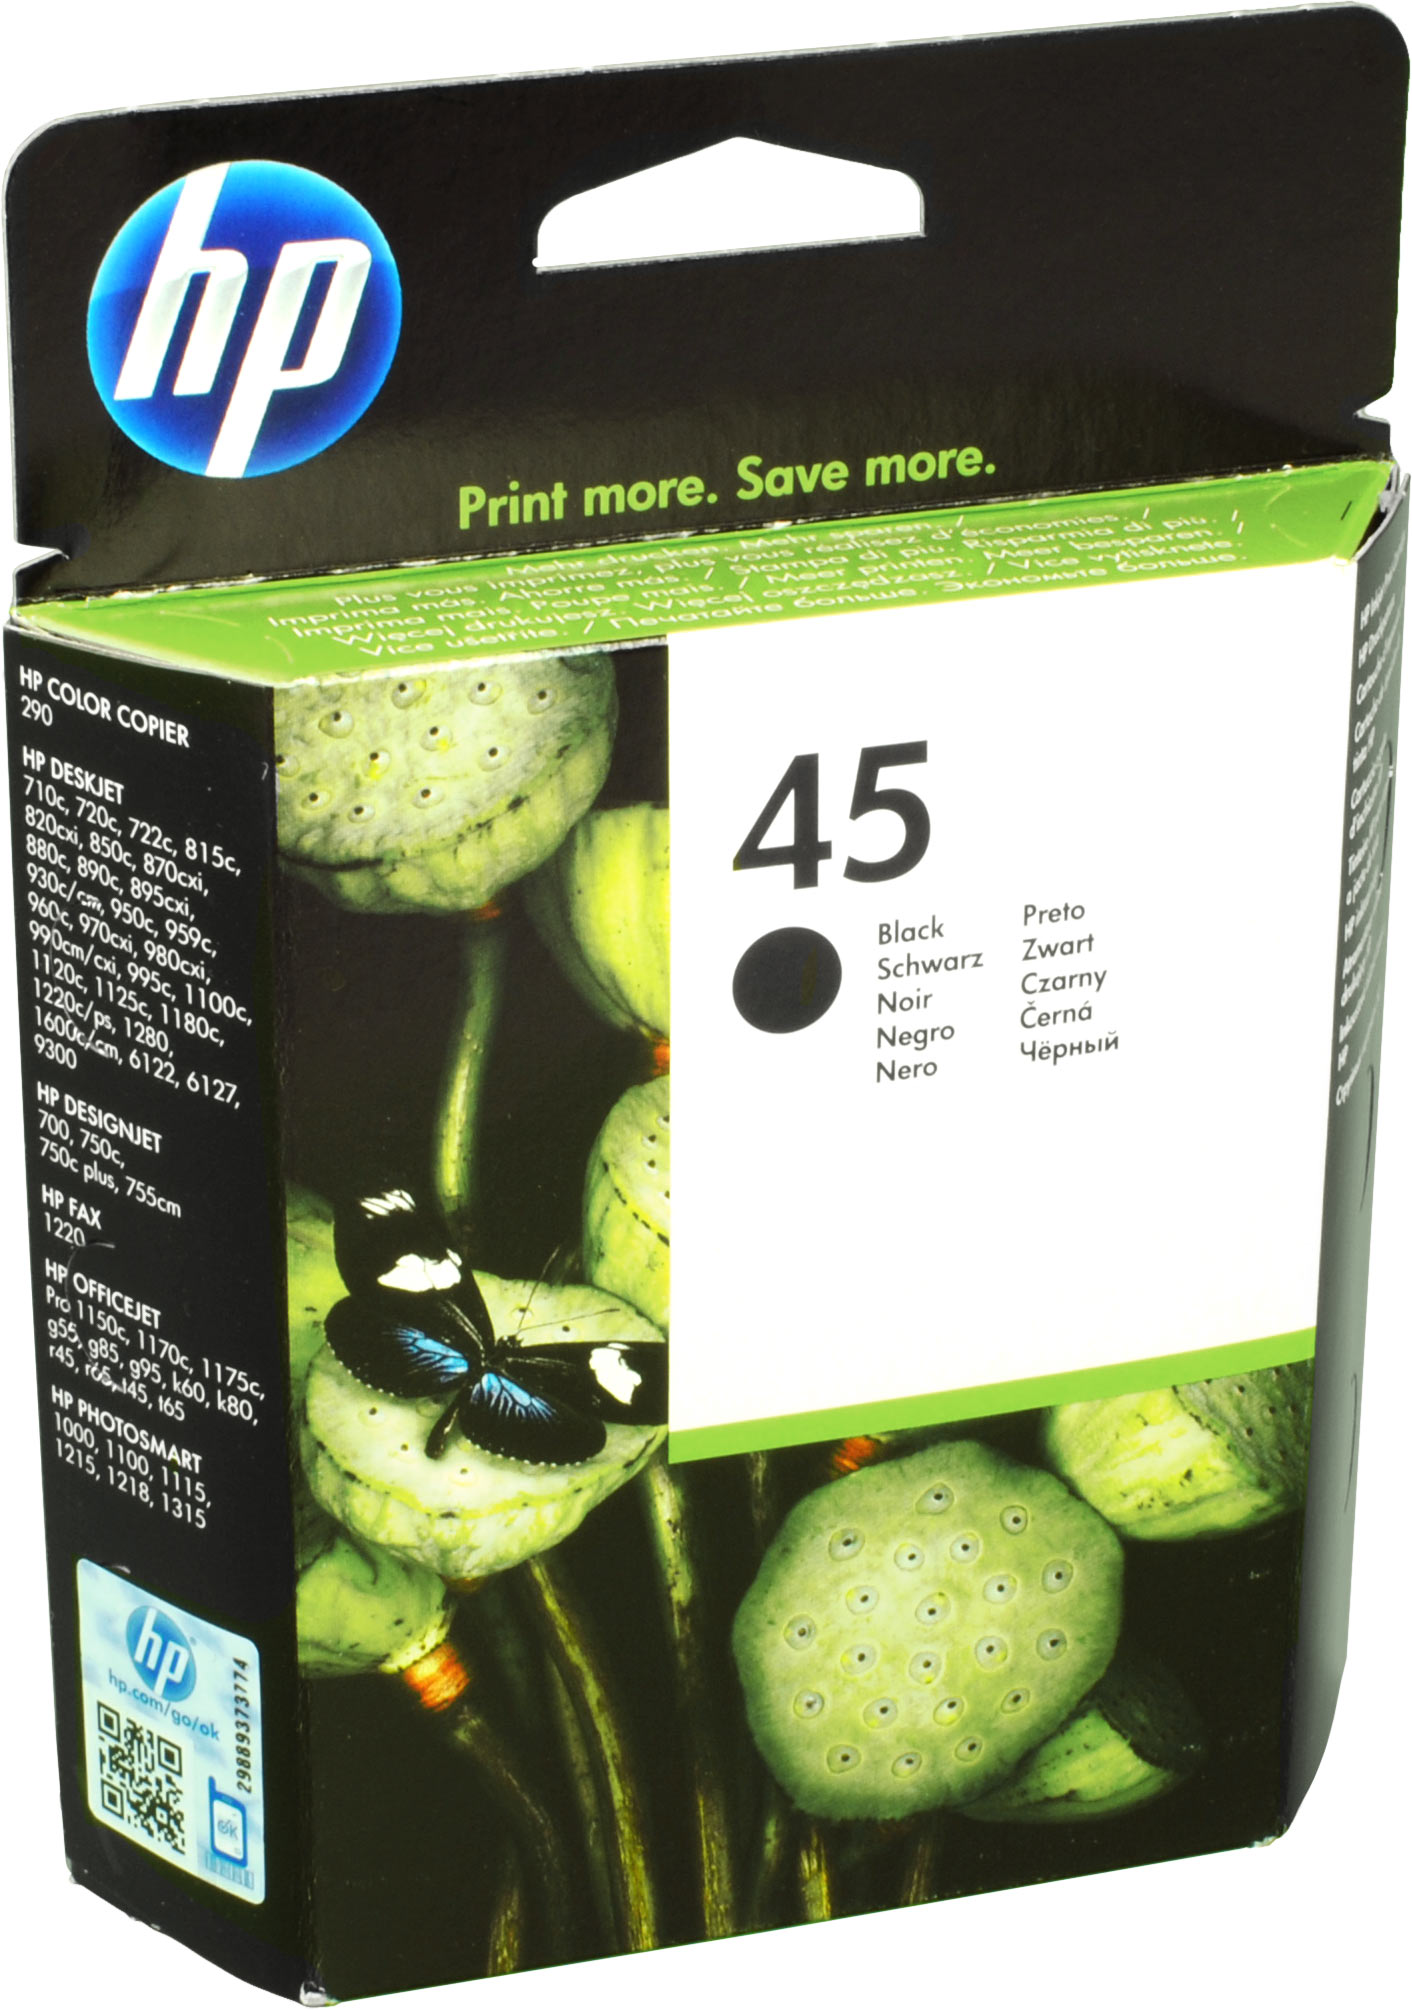 HP Tinte 51645AE  45  schwarz